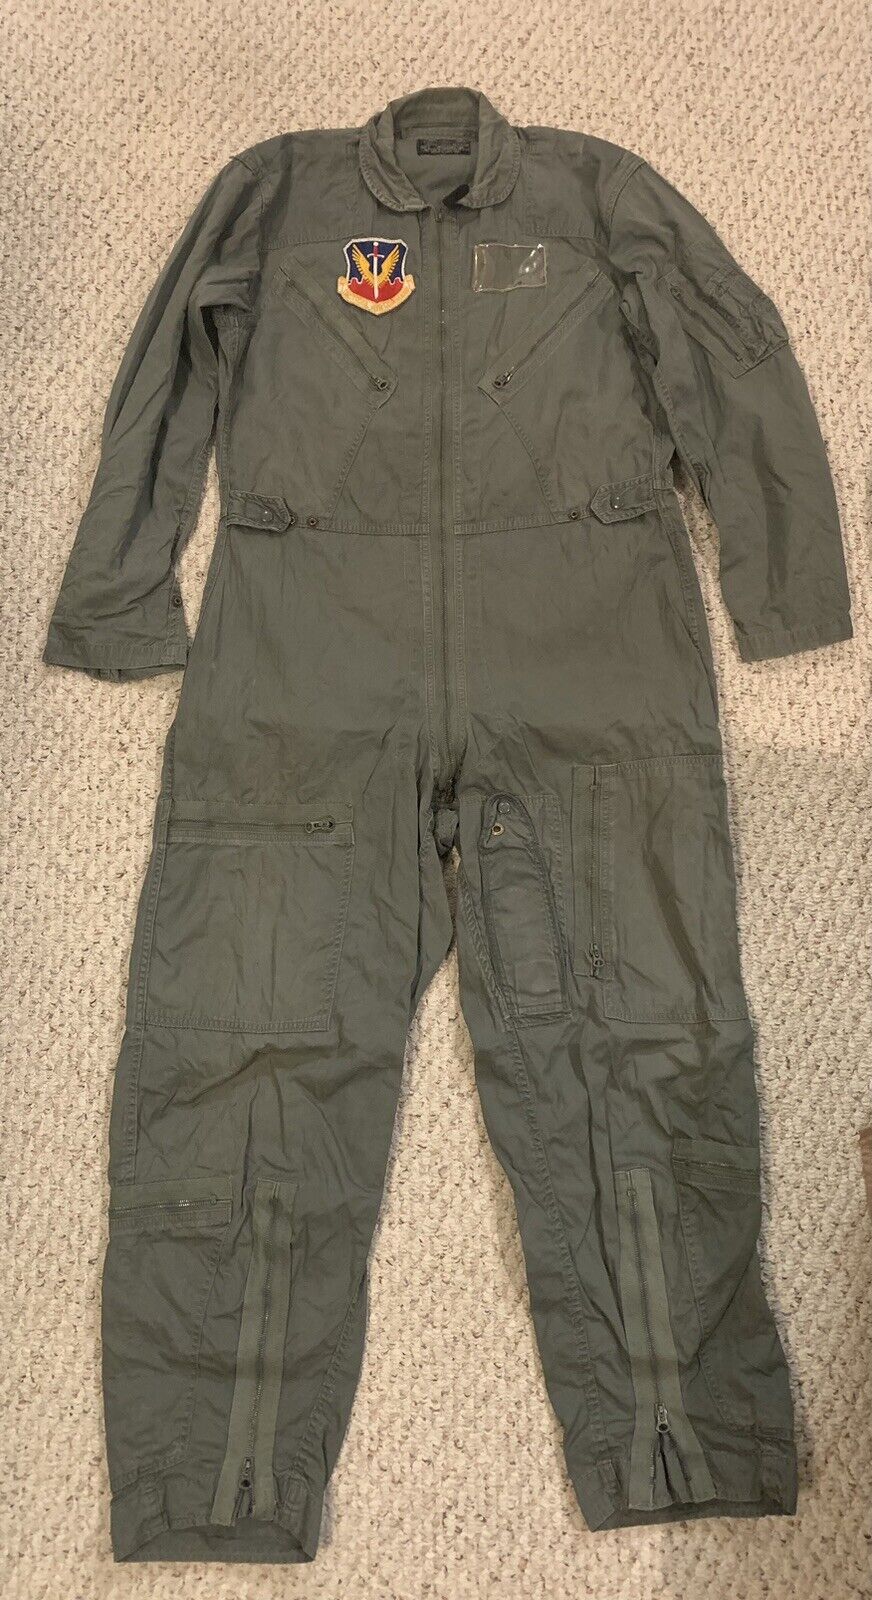 Vietnam Era USAF Air Force Flight Suit Coveralls 1961 Tactical Air Command Patch